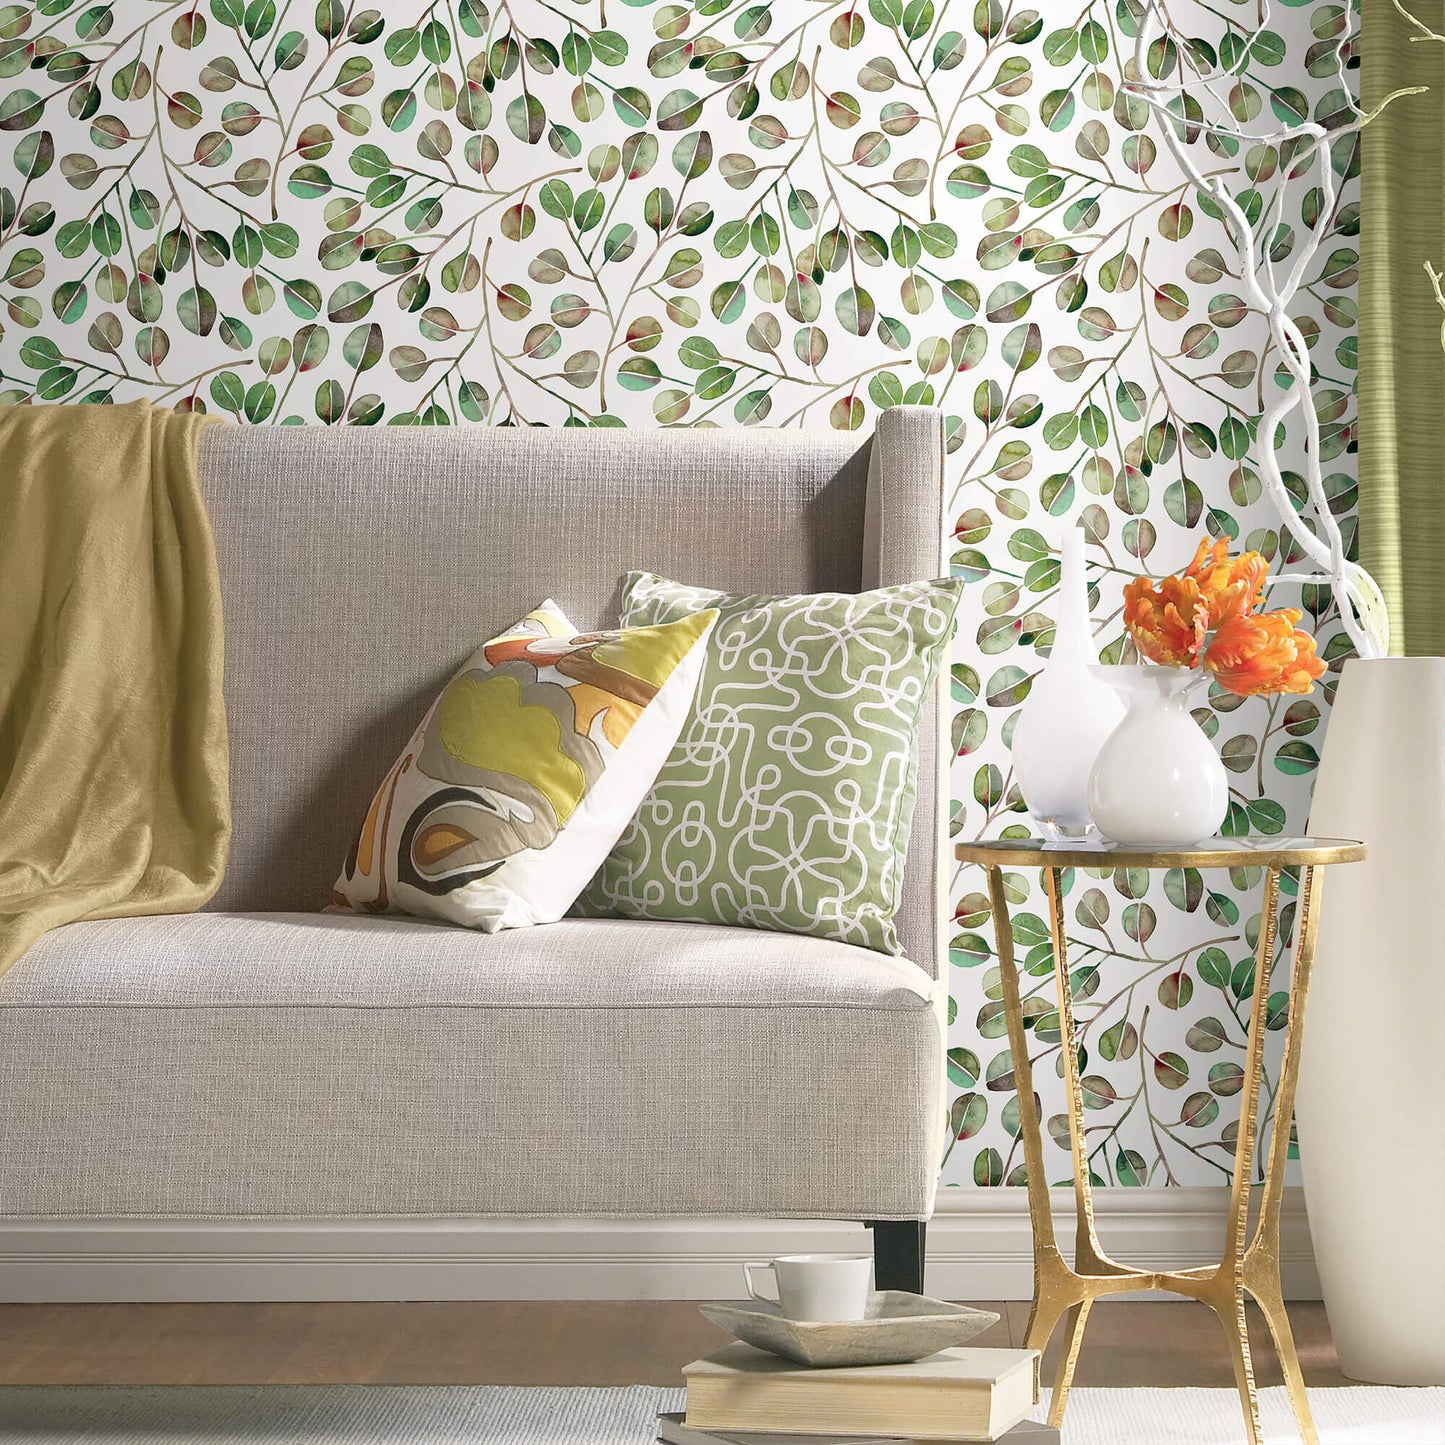 CatCoq Eucalyptus Peel & Stick Wallpaper - Green